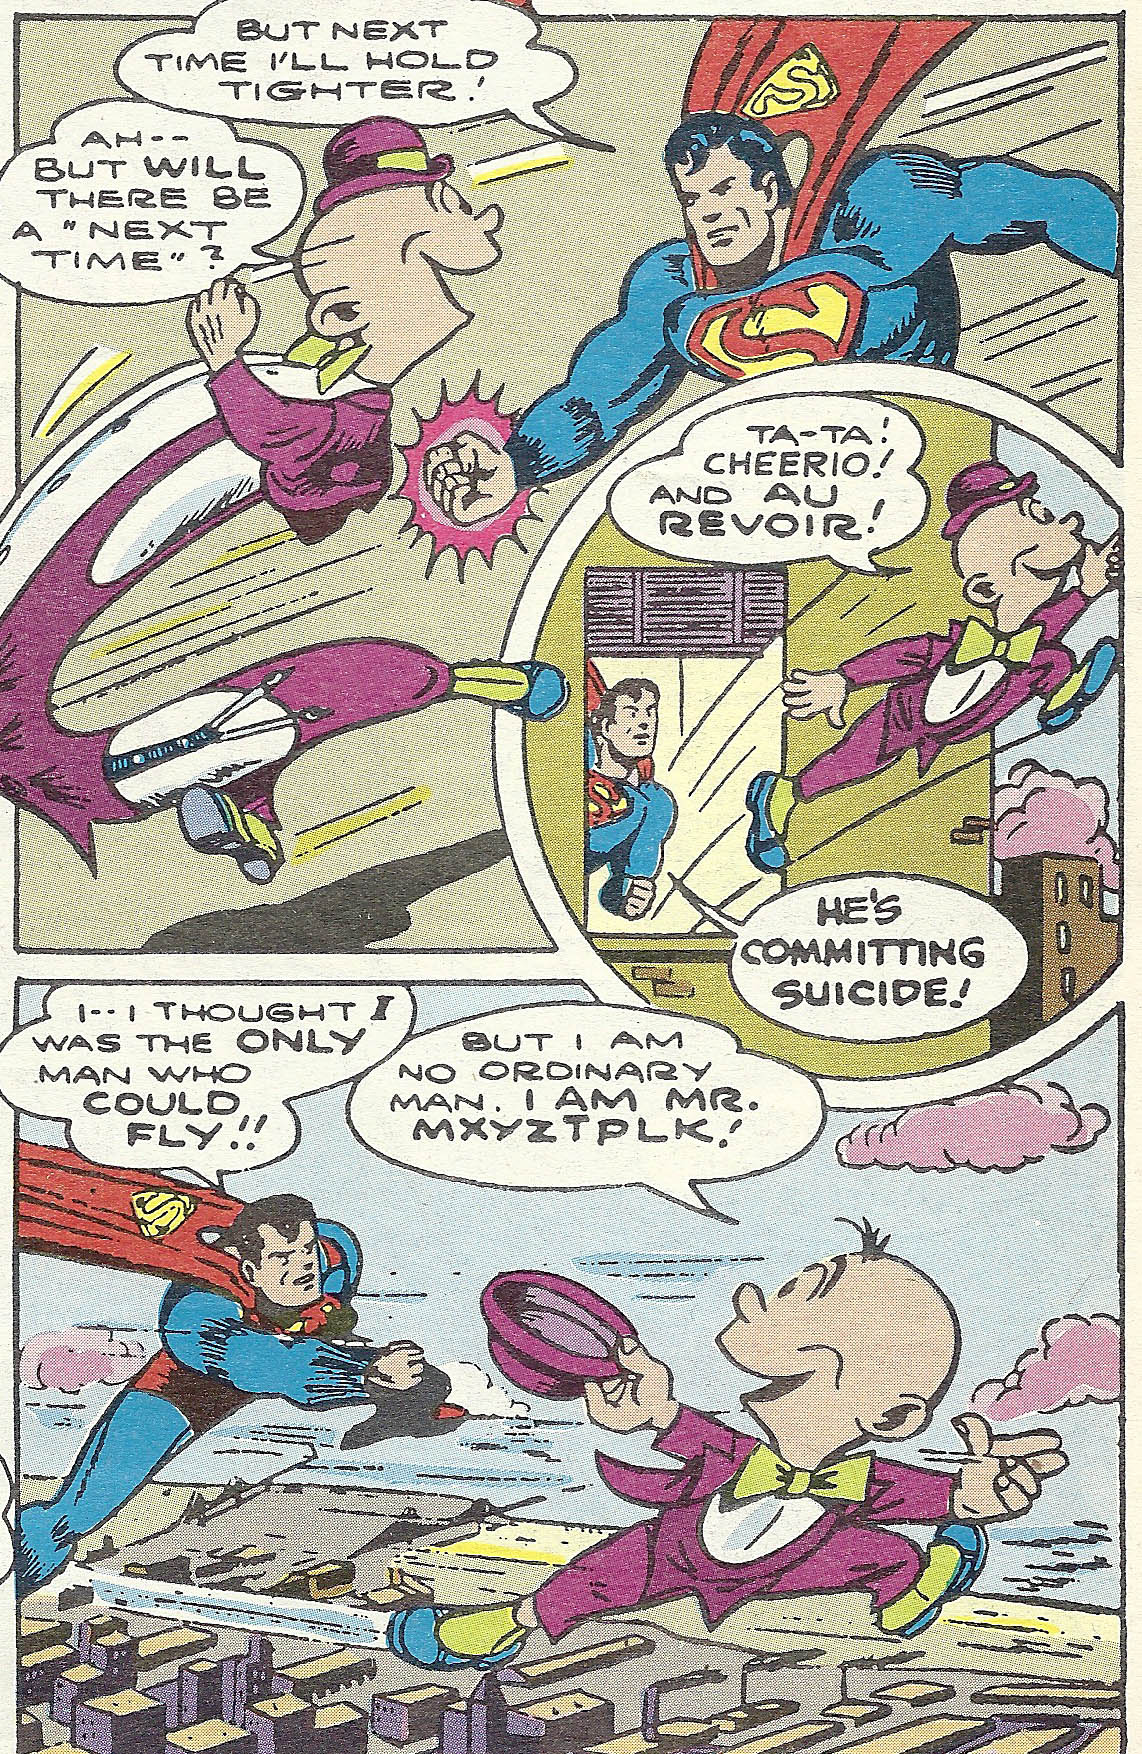 https://www.urban-comics.com/wp-content/uploads/2013/04/superman_44_mrcsddfkf.jpg